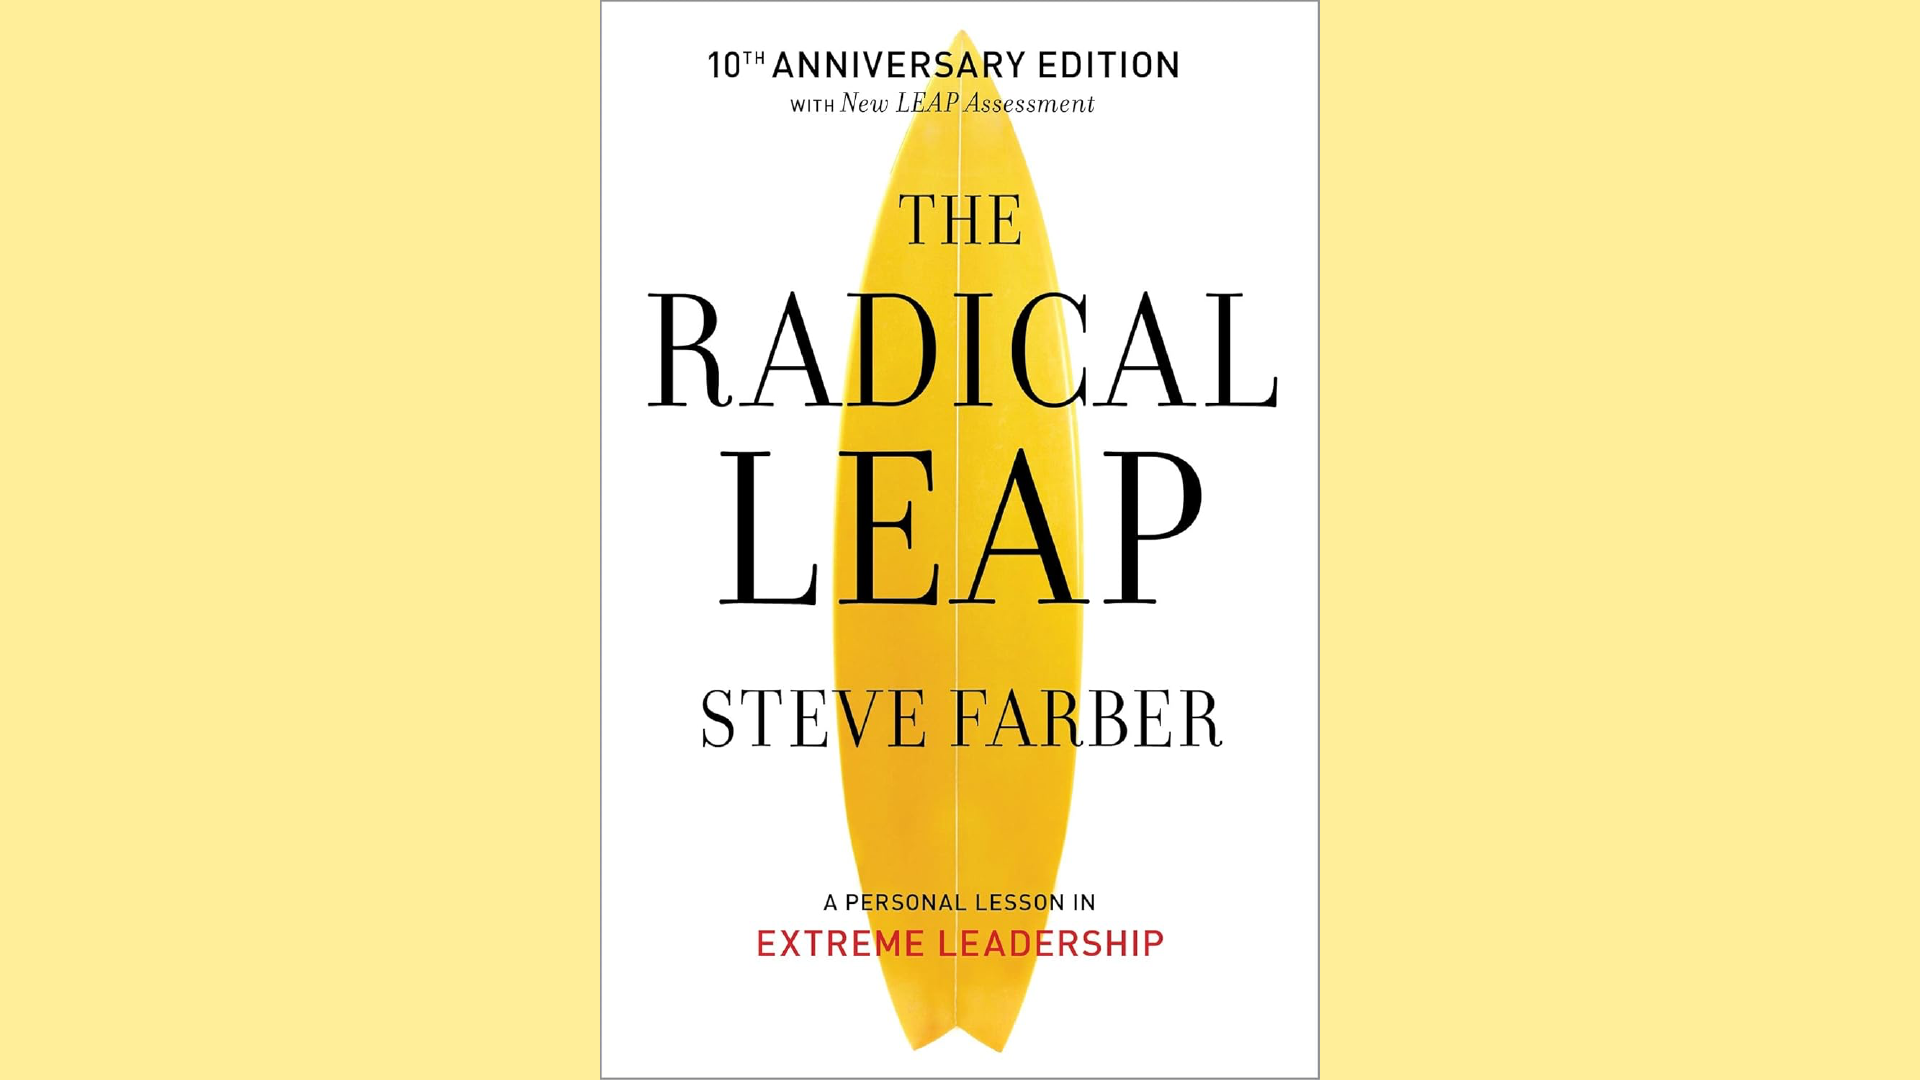 Summary: Radical Leap by Steve Farber